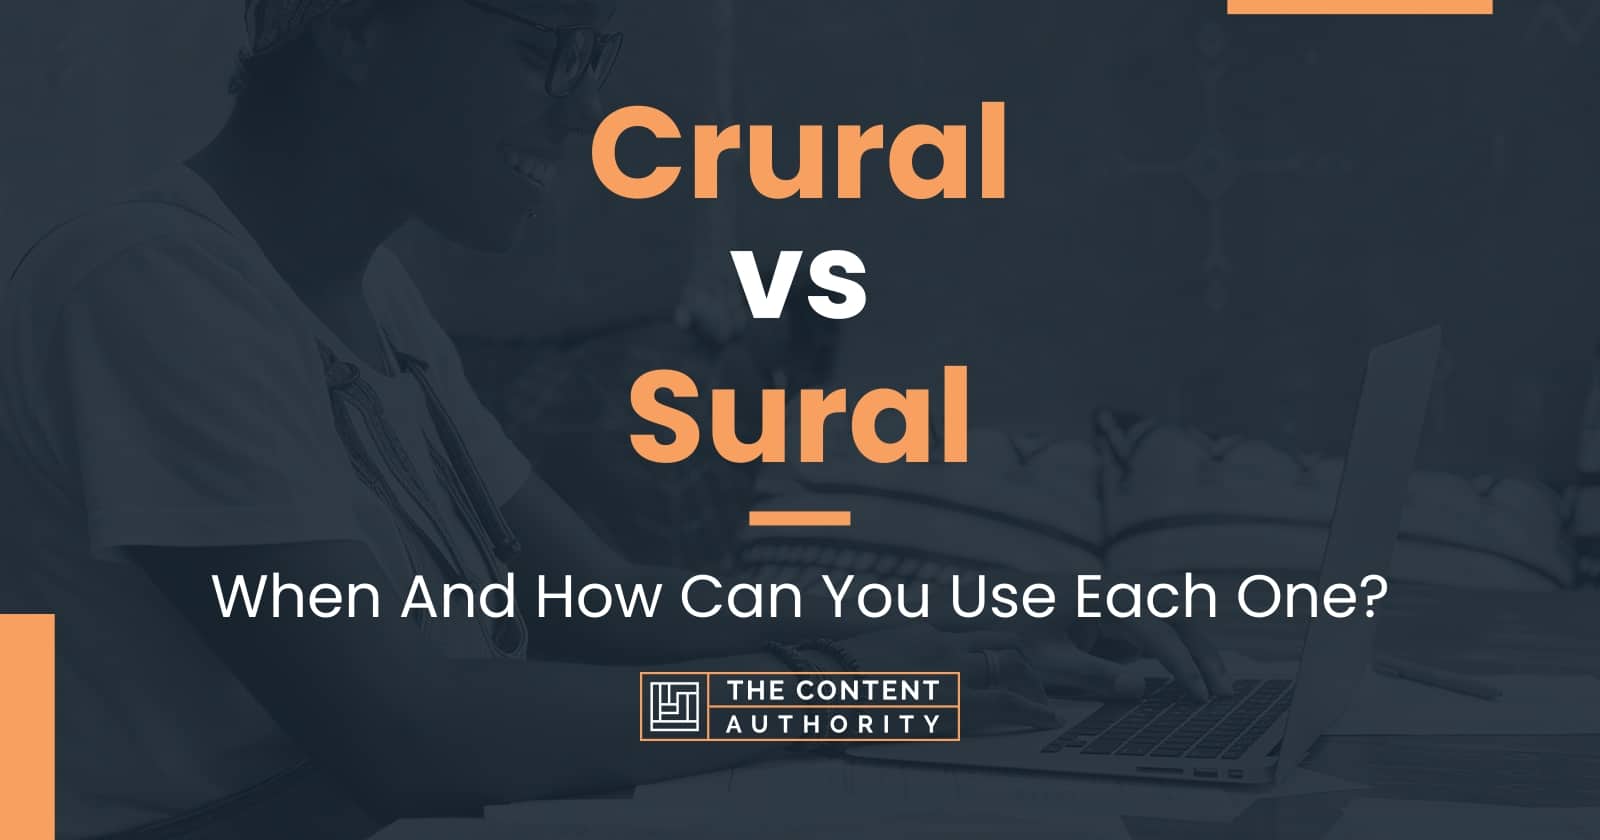 crural and sural